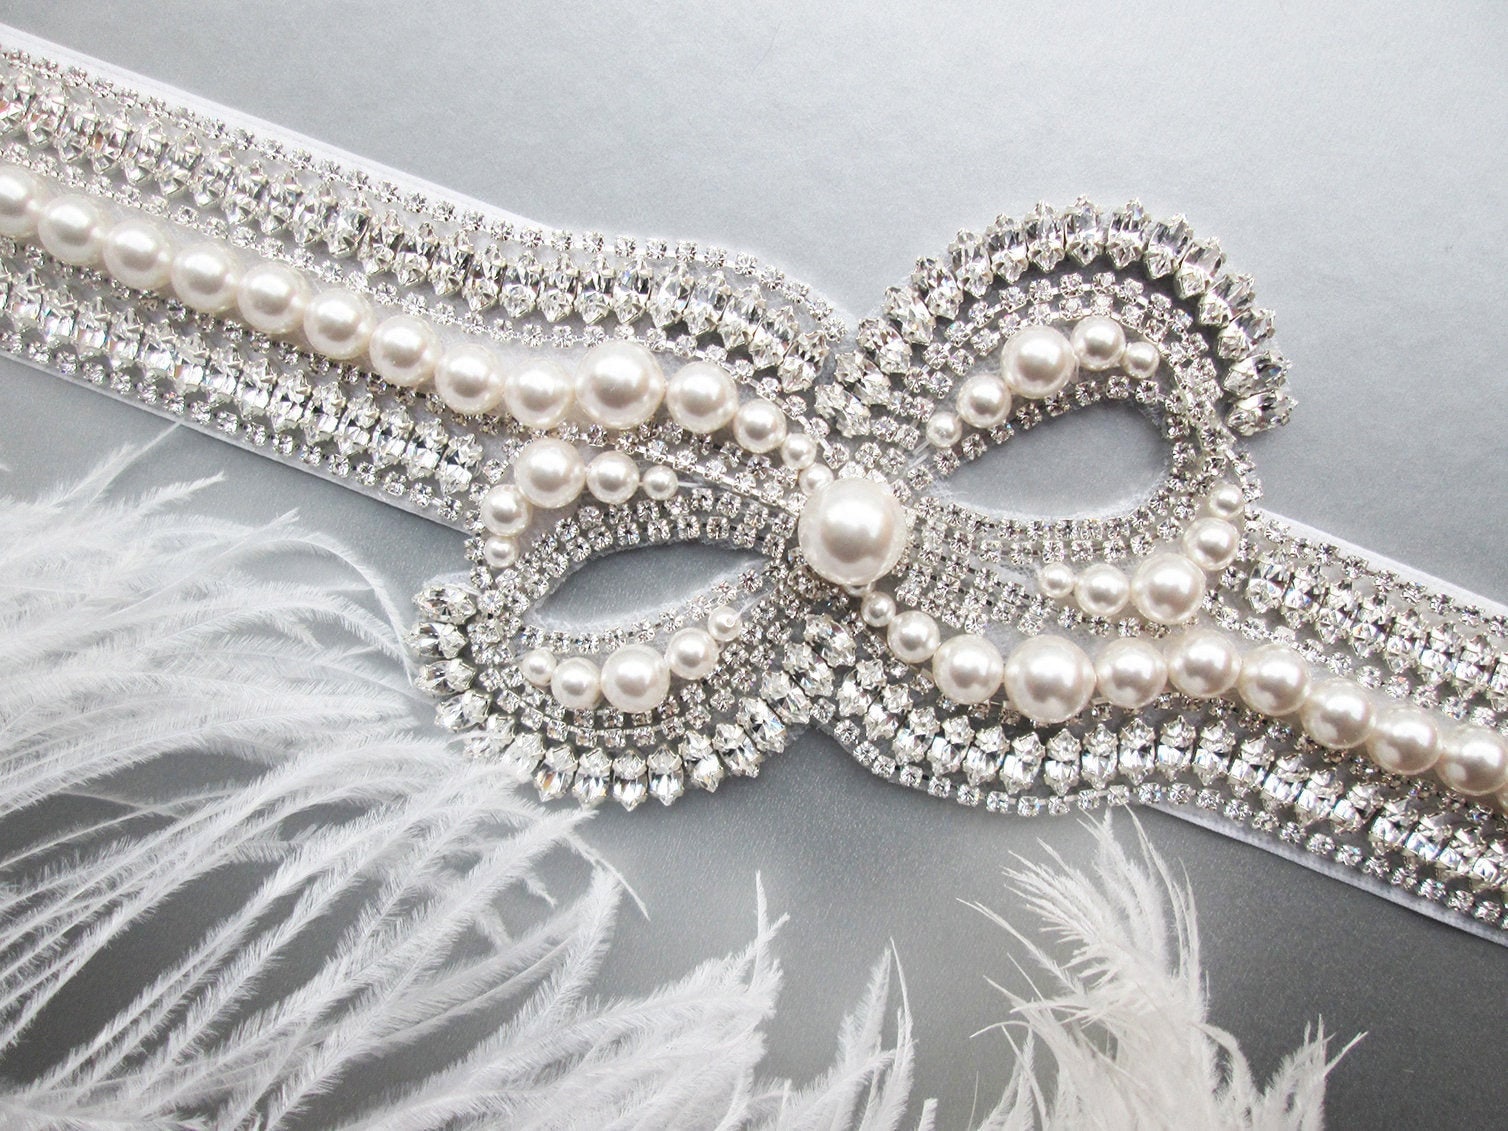 ULAPAN Bridal Belt Sash With Pearls,Wedding Belt With Crystals,Shin Elegant Wedding Sash Floral,S382 